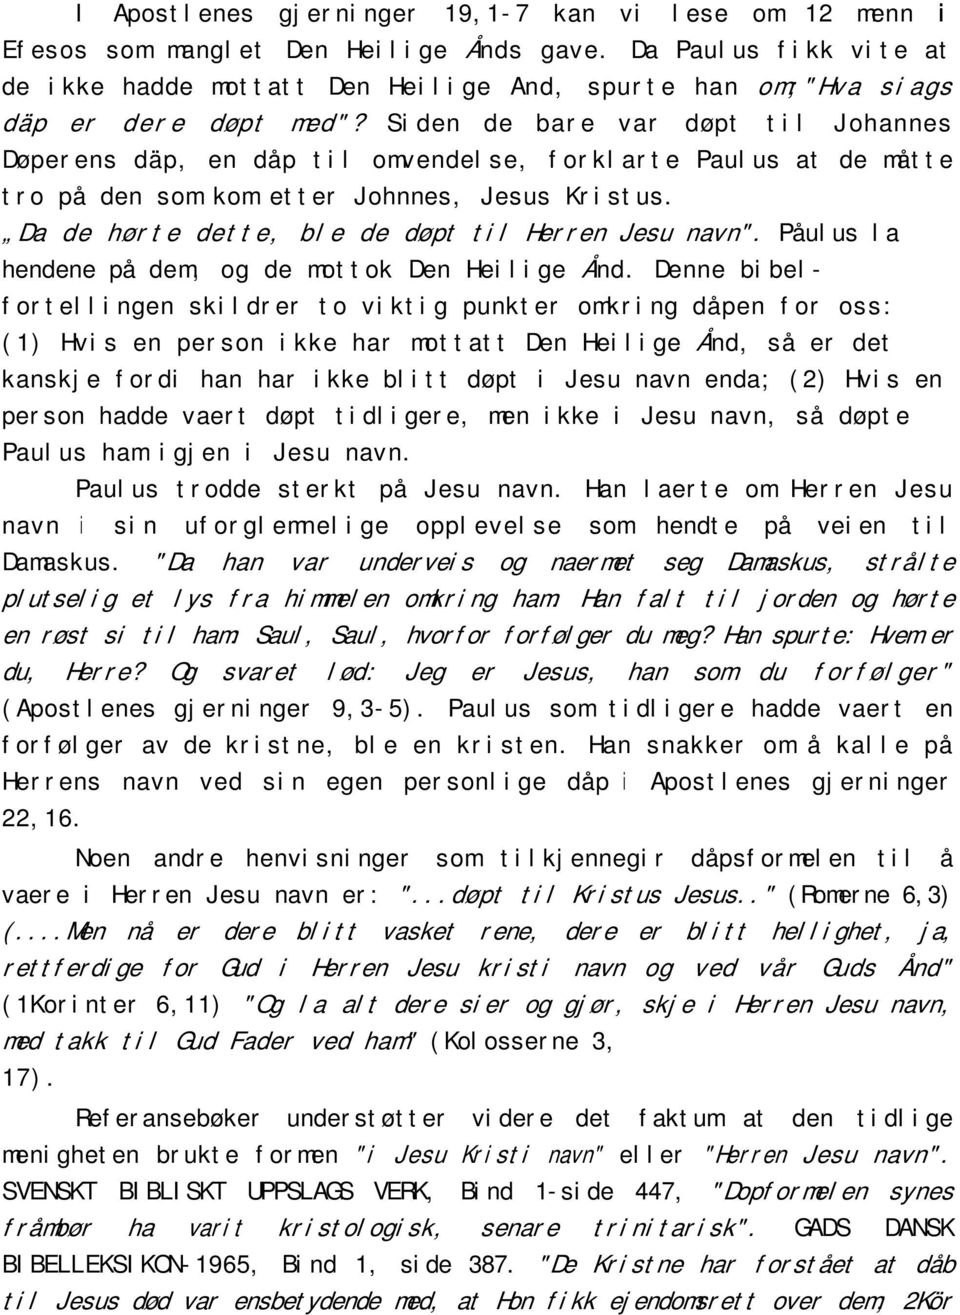 Siden de bare var døpt til Johannes Døperens däp, en dåp til omvendelse, forklarte Paulus at de måtte tro på den som kom etter Johnnes, Jesus Kristus.